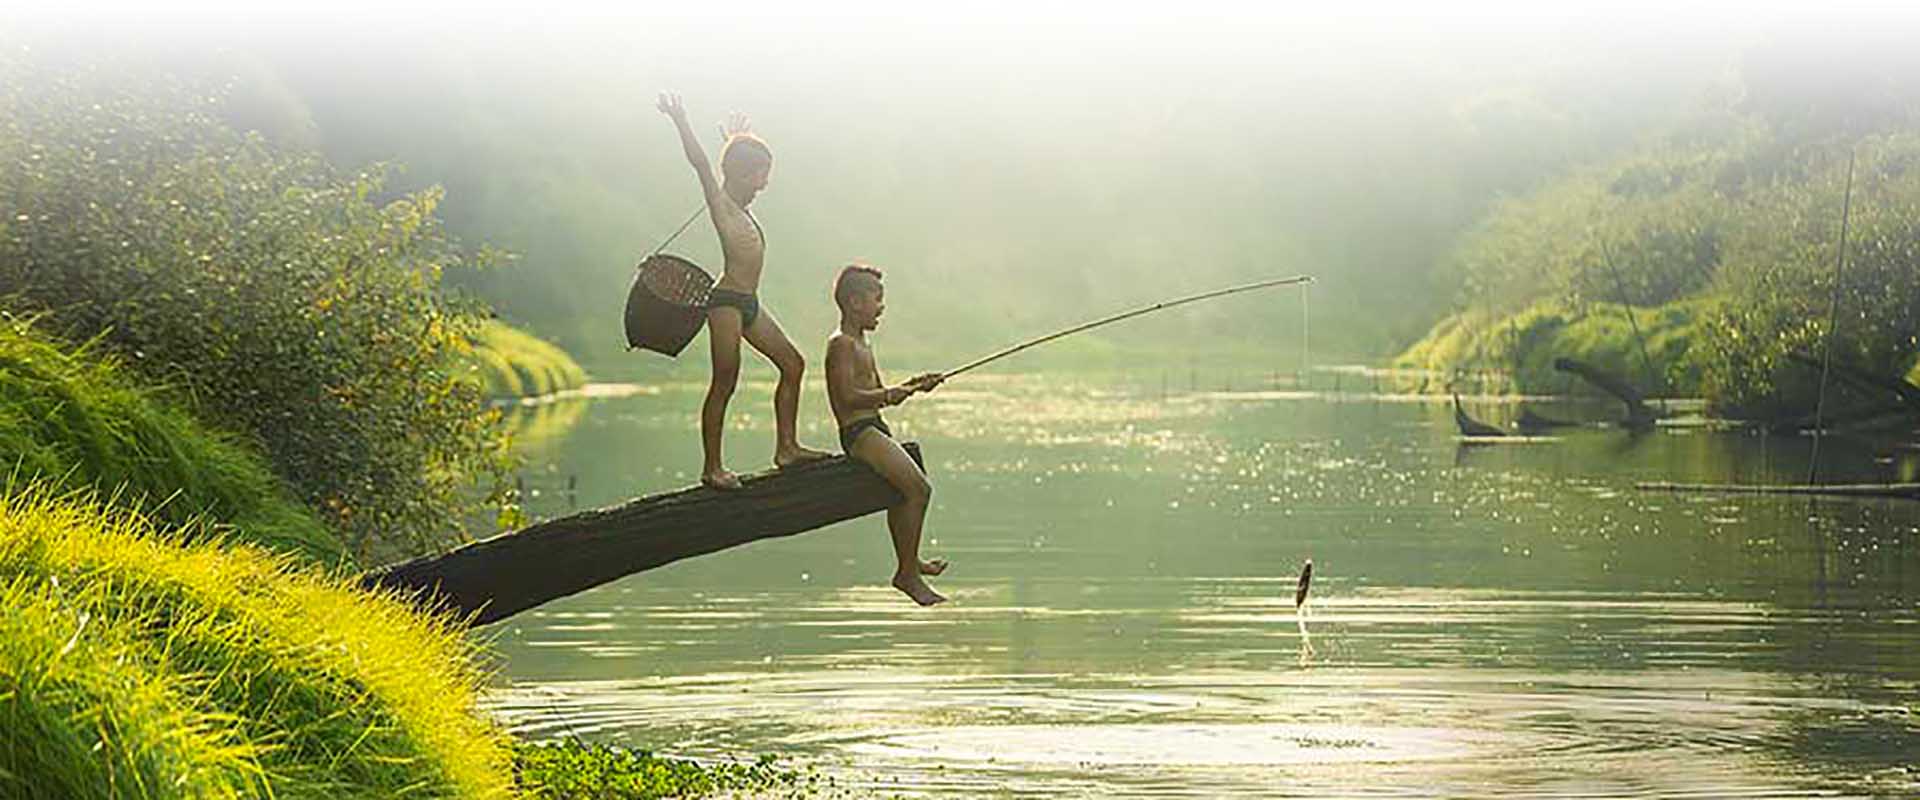 River Kwai tour fishing boys